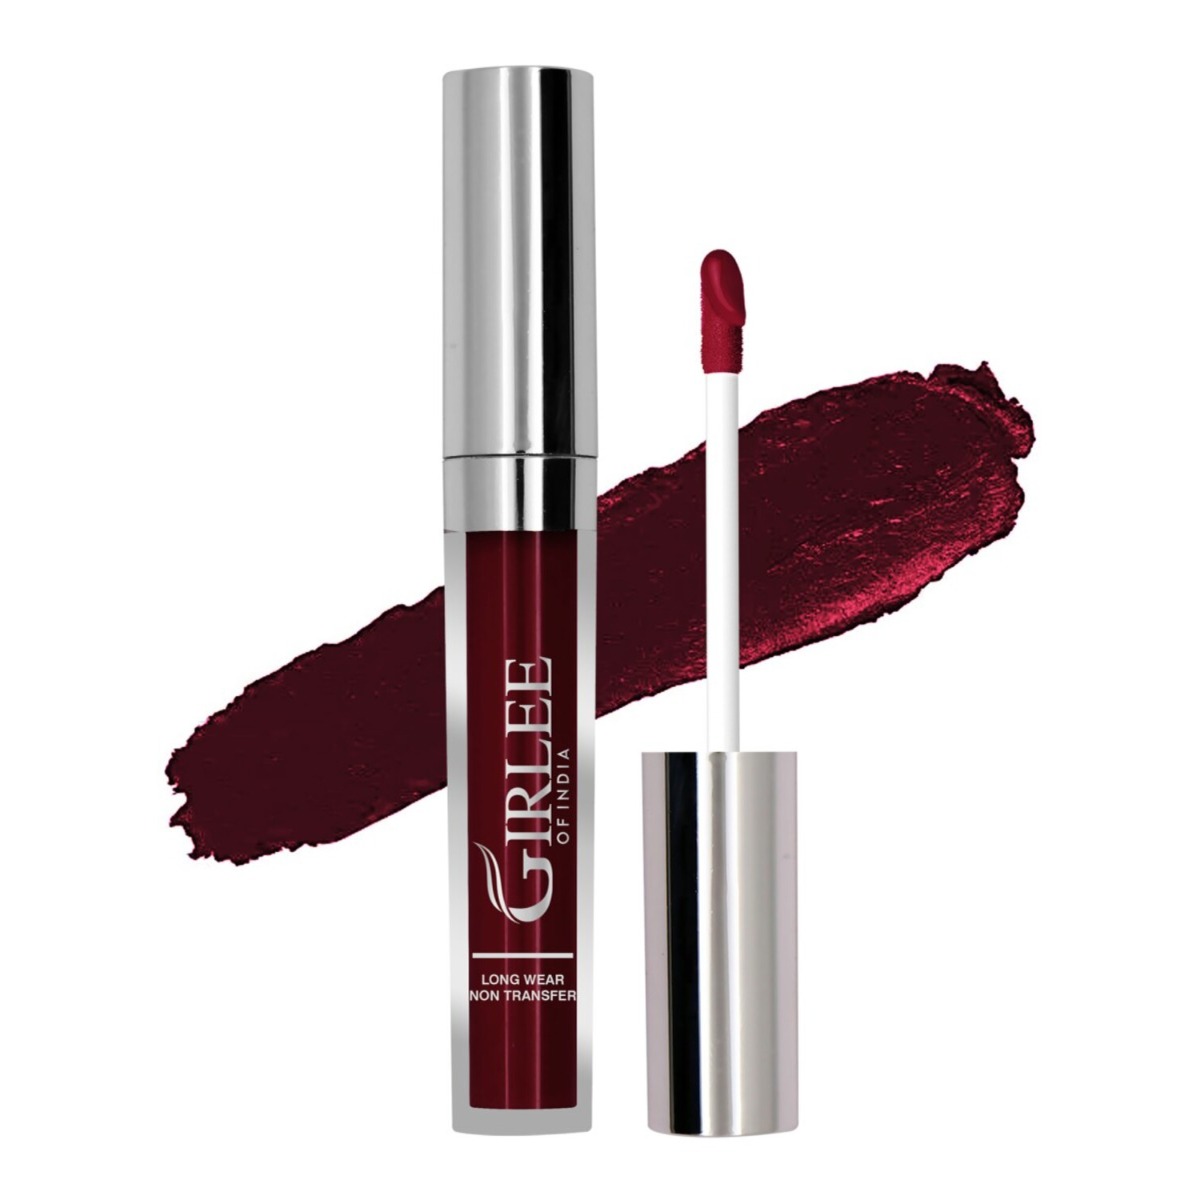 Covergirl Girlee Non Transfer Liquid Lipstick, 4ml